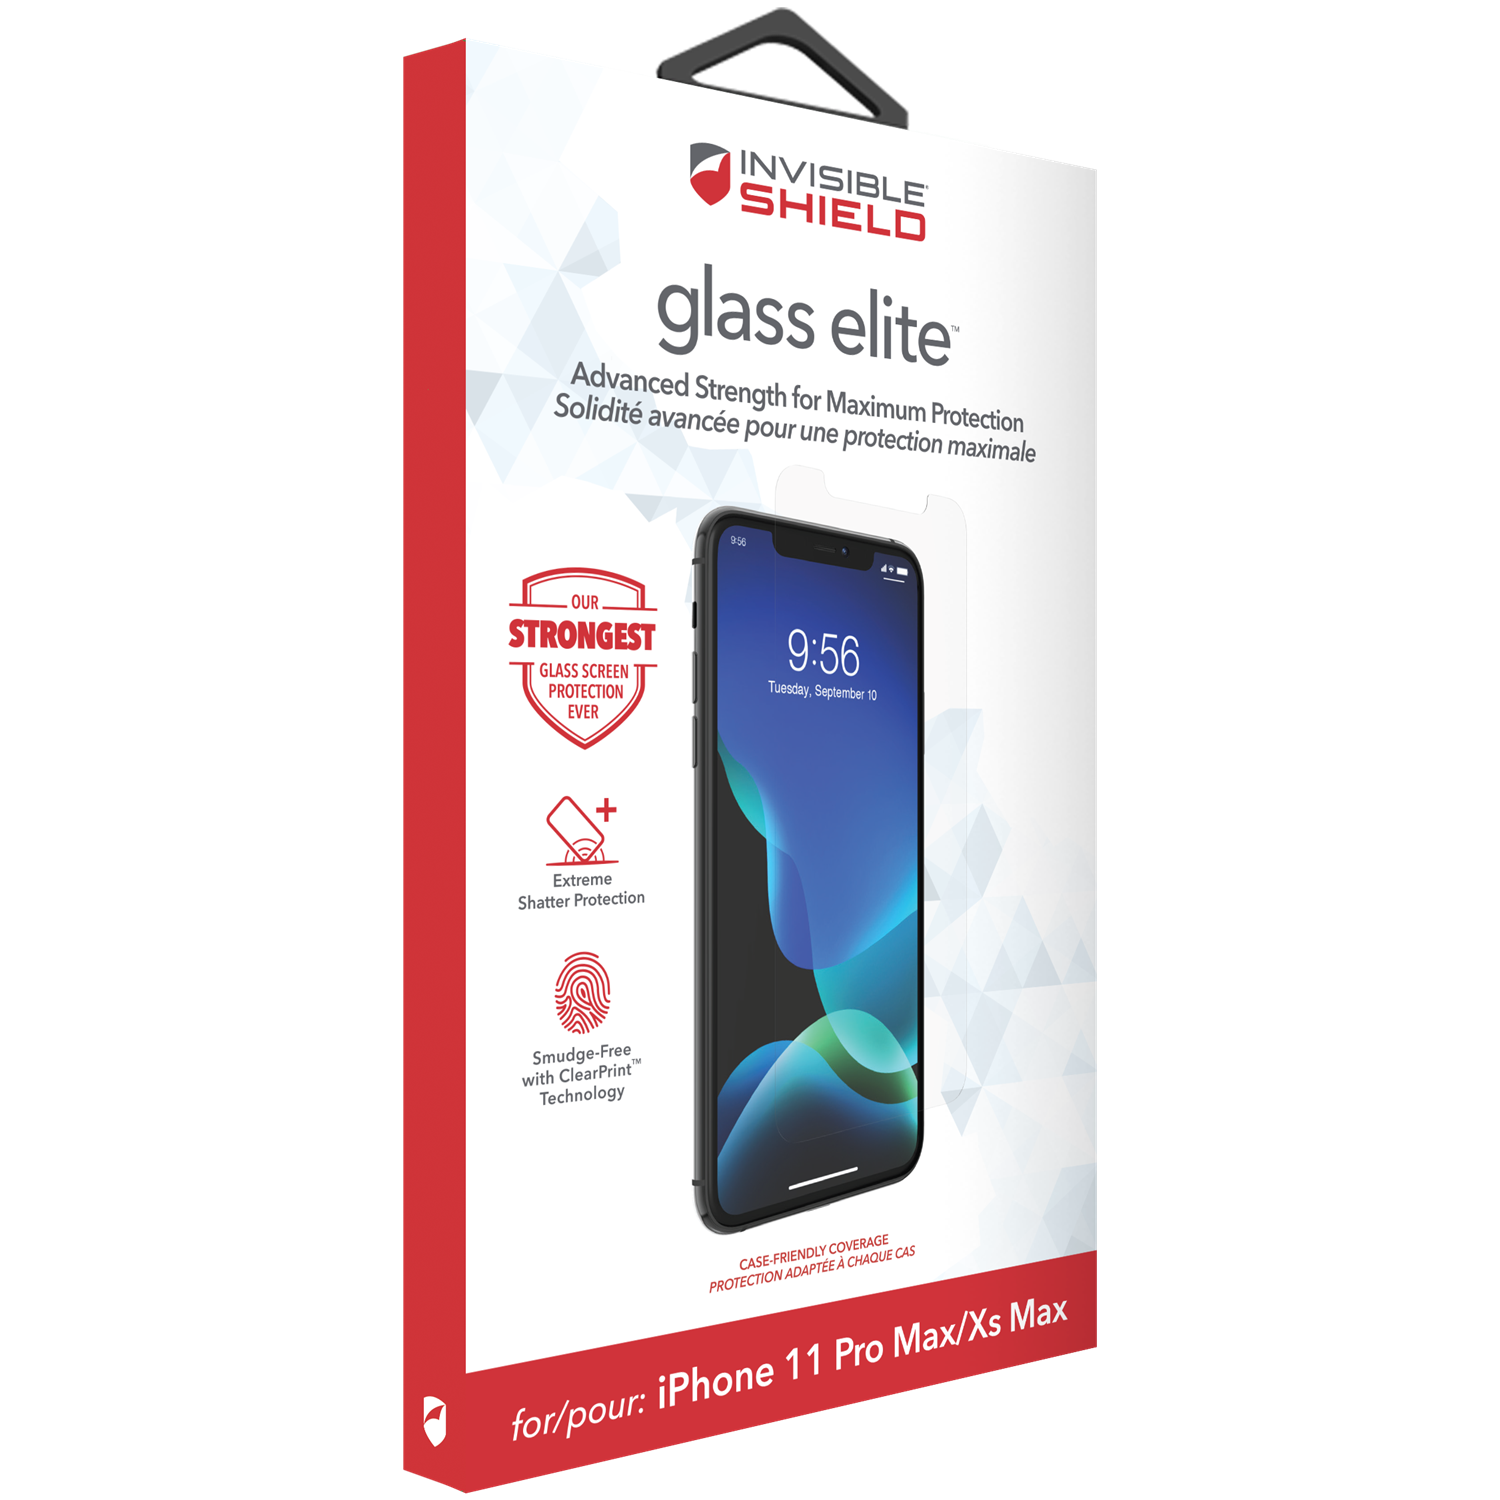 InvisibleShield Glass Elite iPhone 11 Pro Max/XS Max